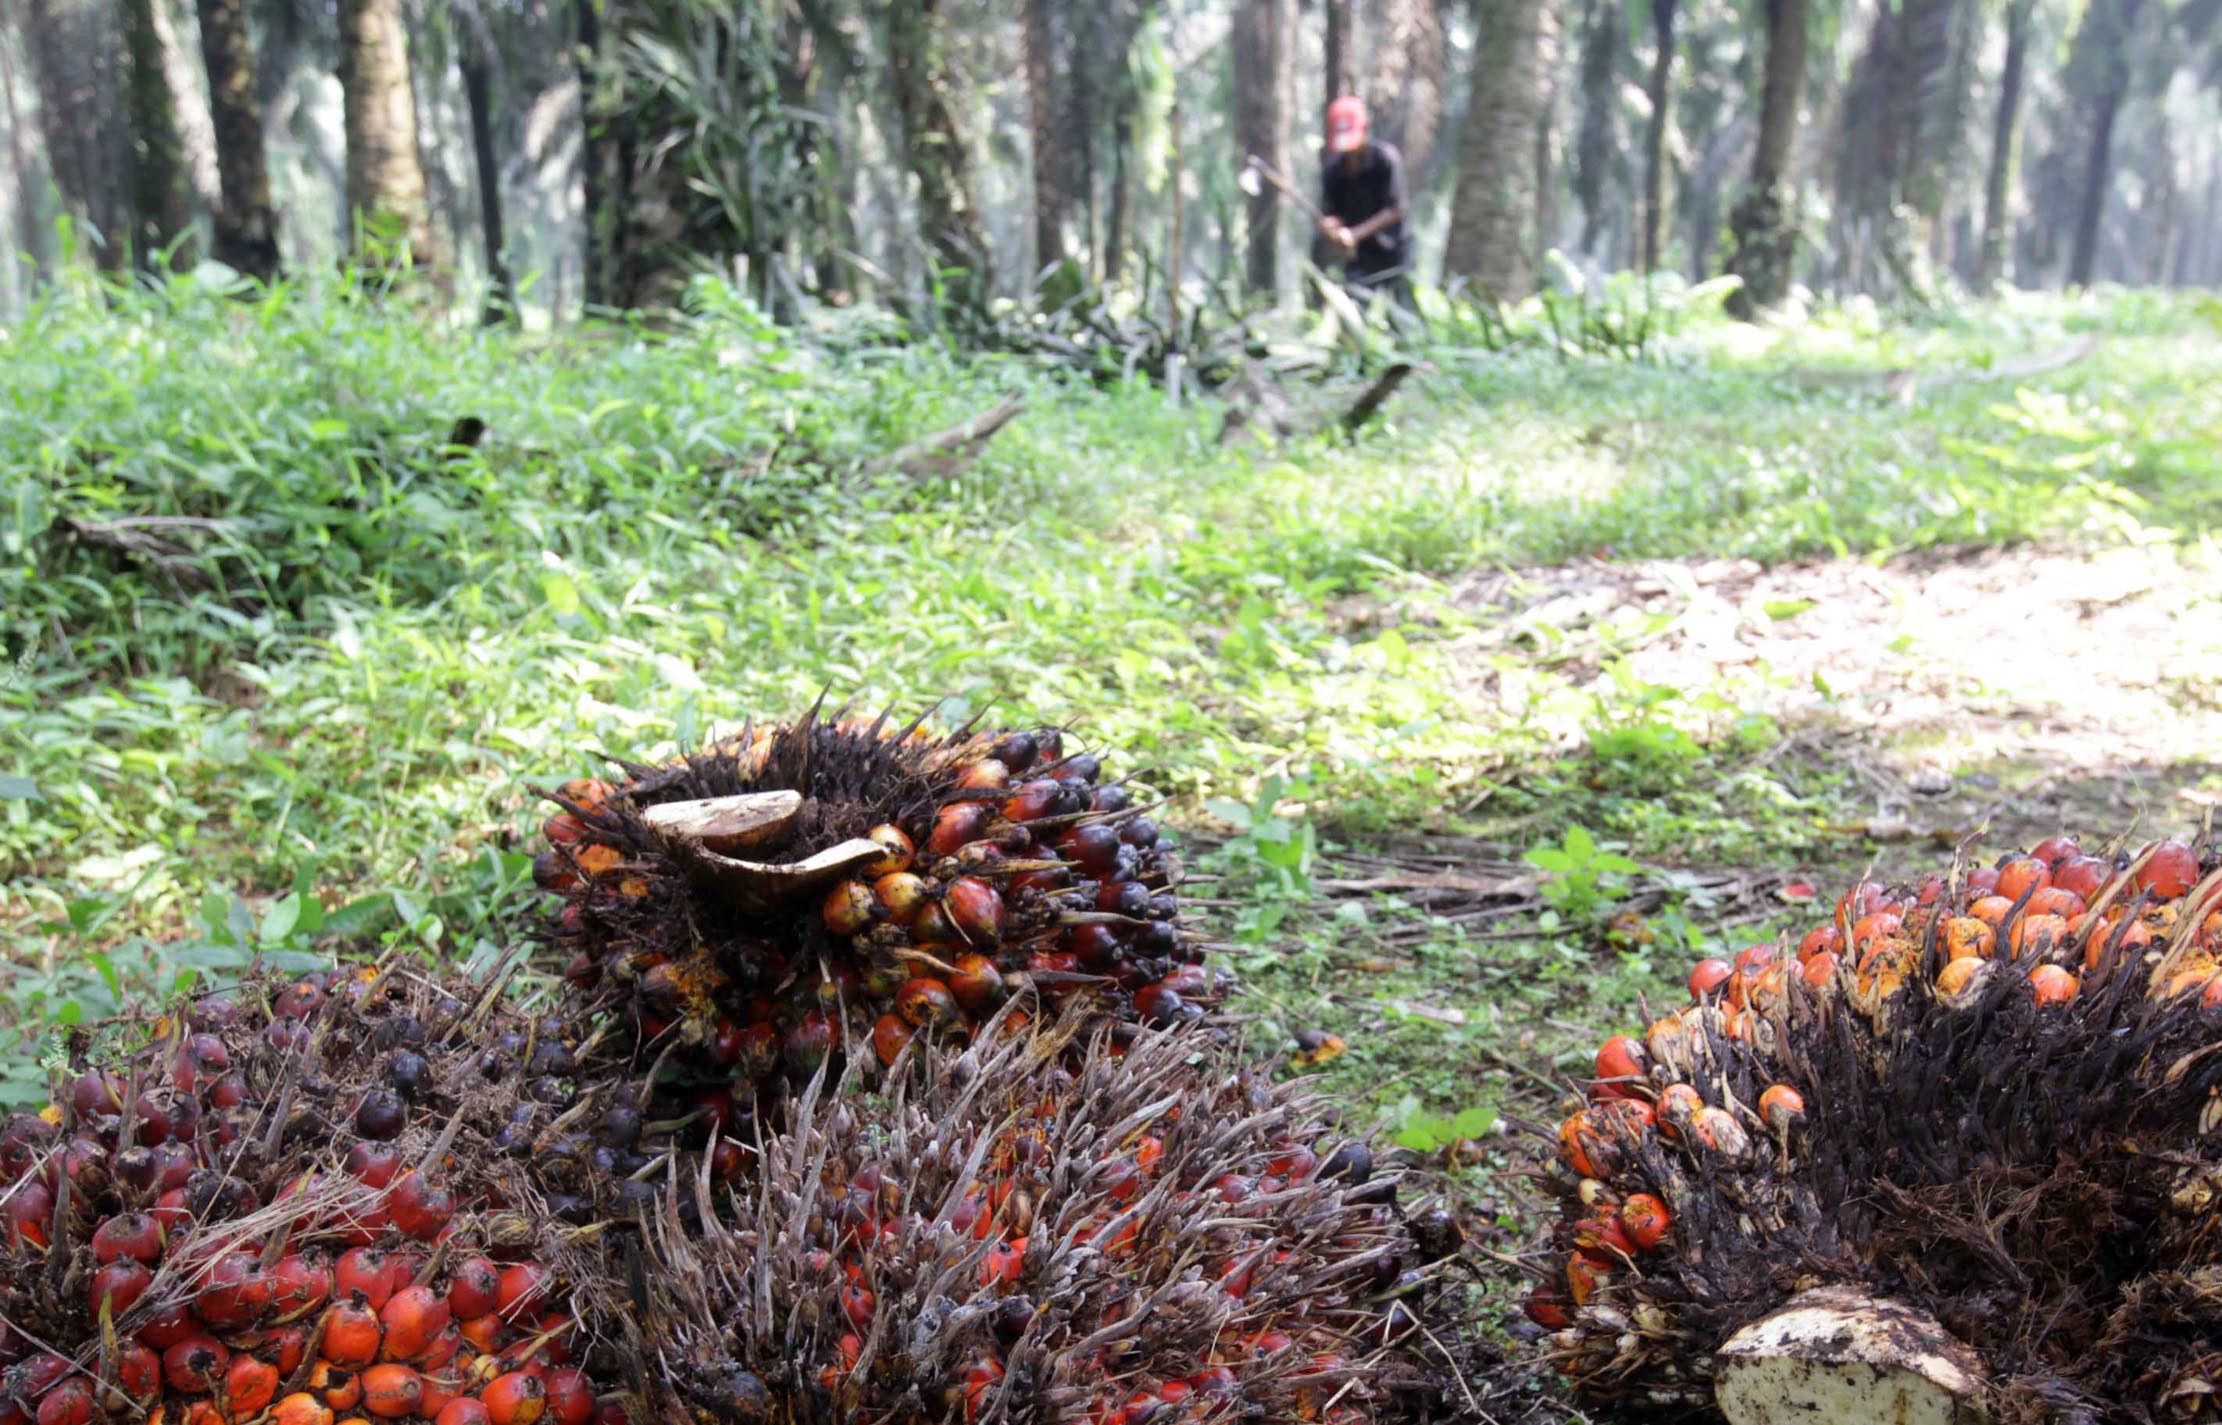 <p>Nampak seorang petani tengah melakukan panen tanaman kelapa sawit di kawasan Bogor Jawa Barat, Kamis 28 Mei 2021. Foto : Panji Asmoro/TrenAsia</p>
